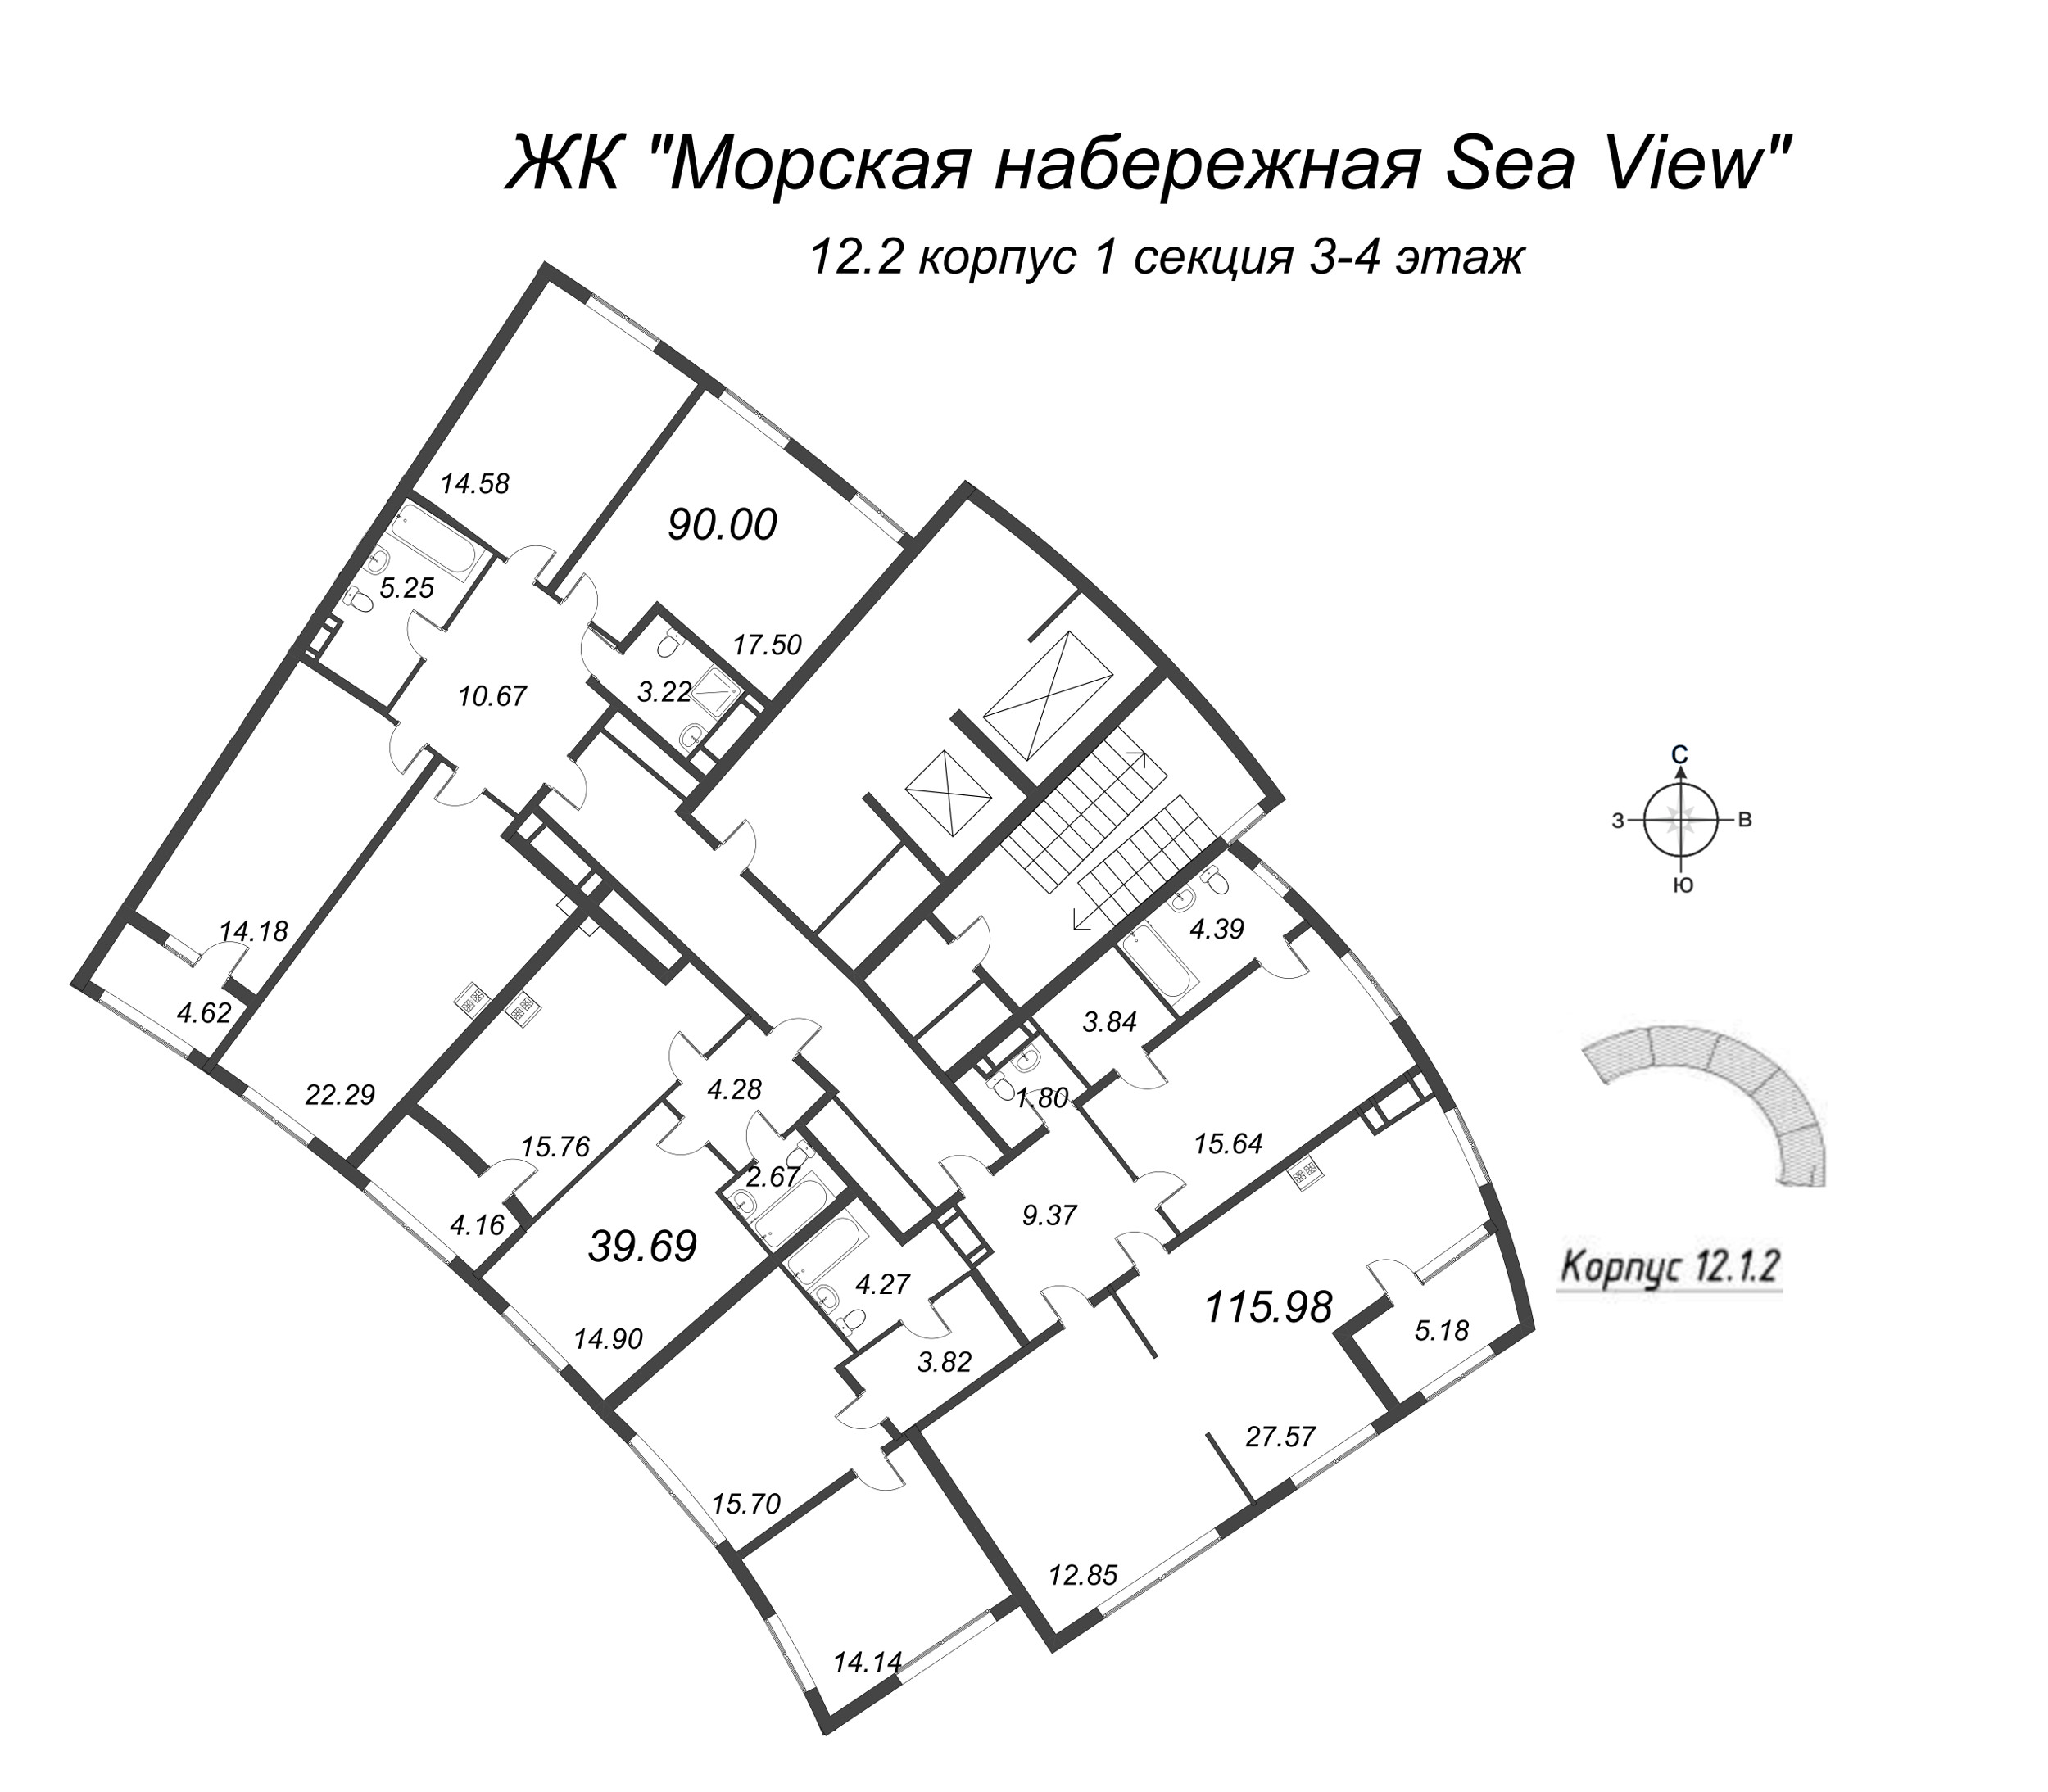 5-комнатная (Евро) квартира, 115.98 м² - планировка этажа